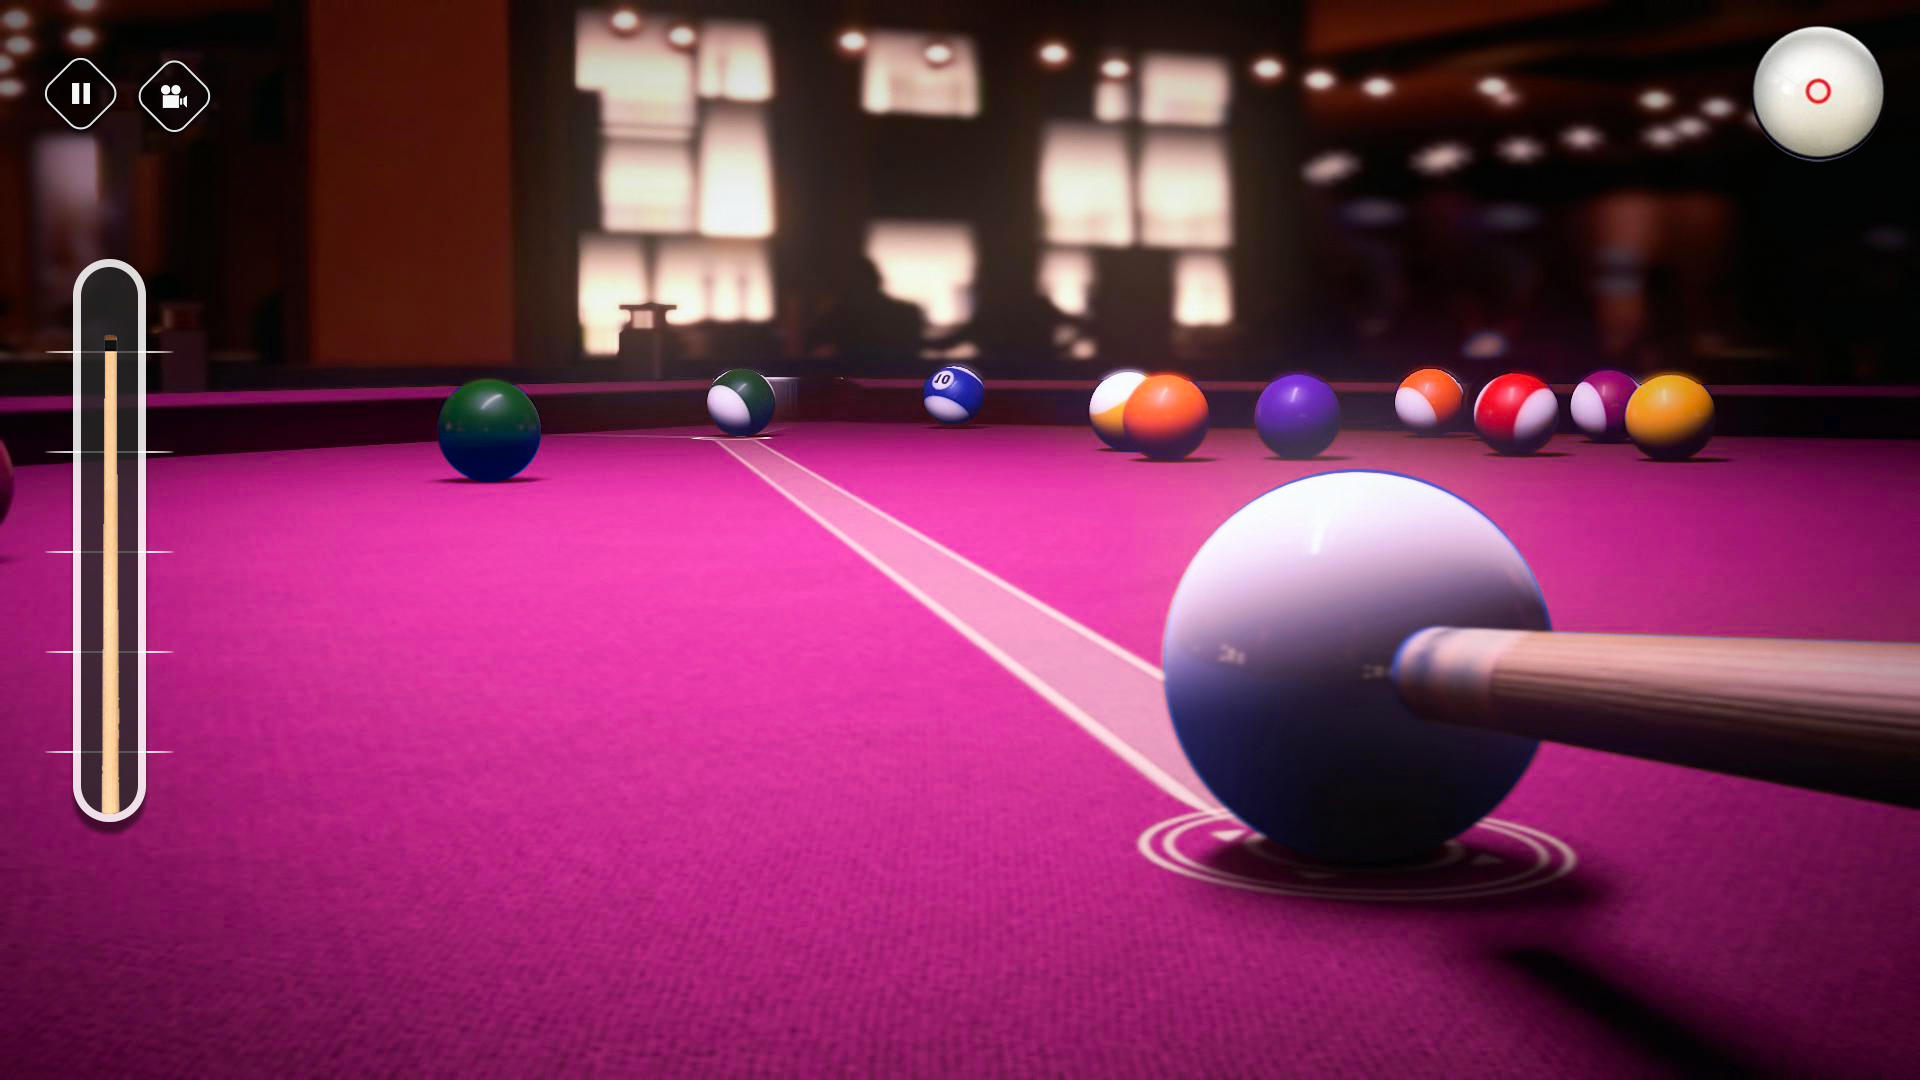 Screenshot 1 of Bola 8 De Bilhar - Snooker 1.2.5